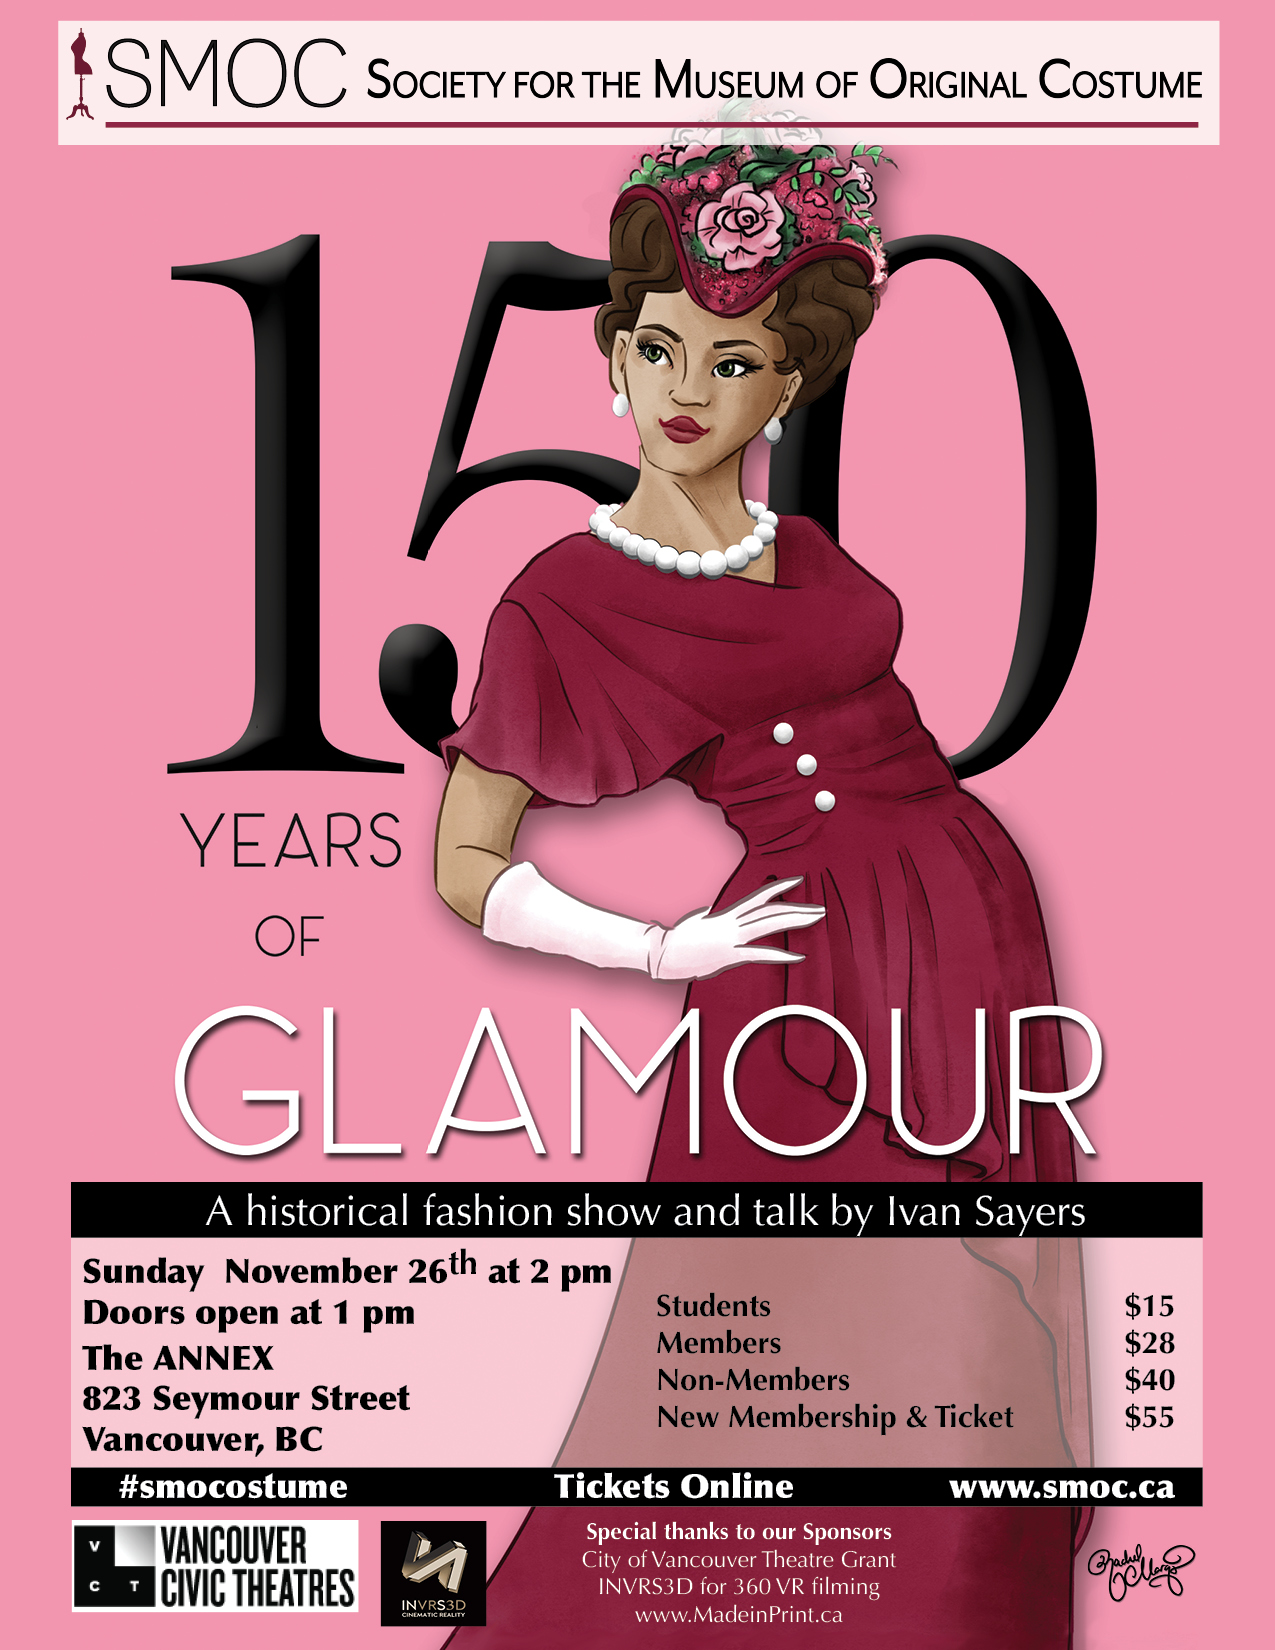 150 Years of Glamour03_web.jpg